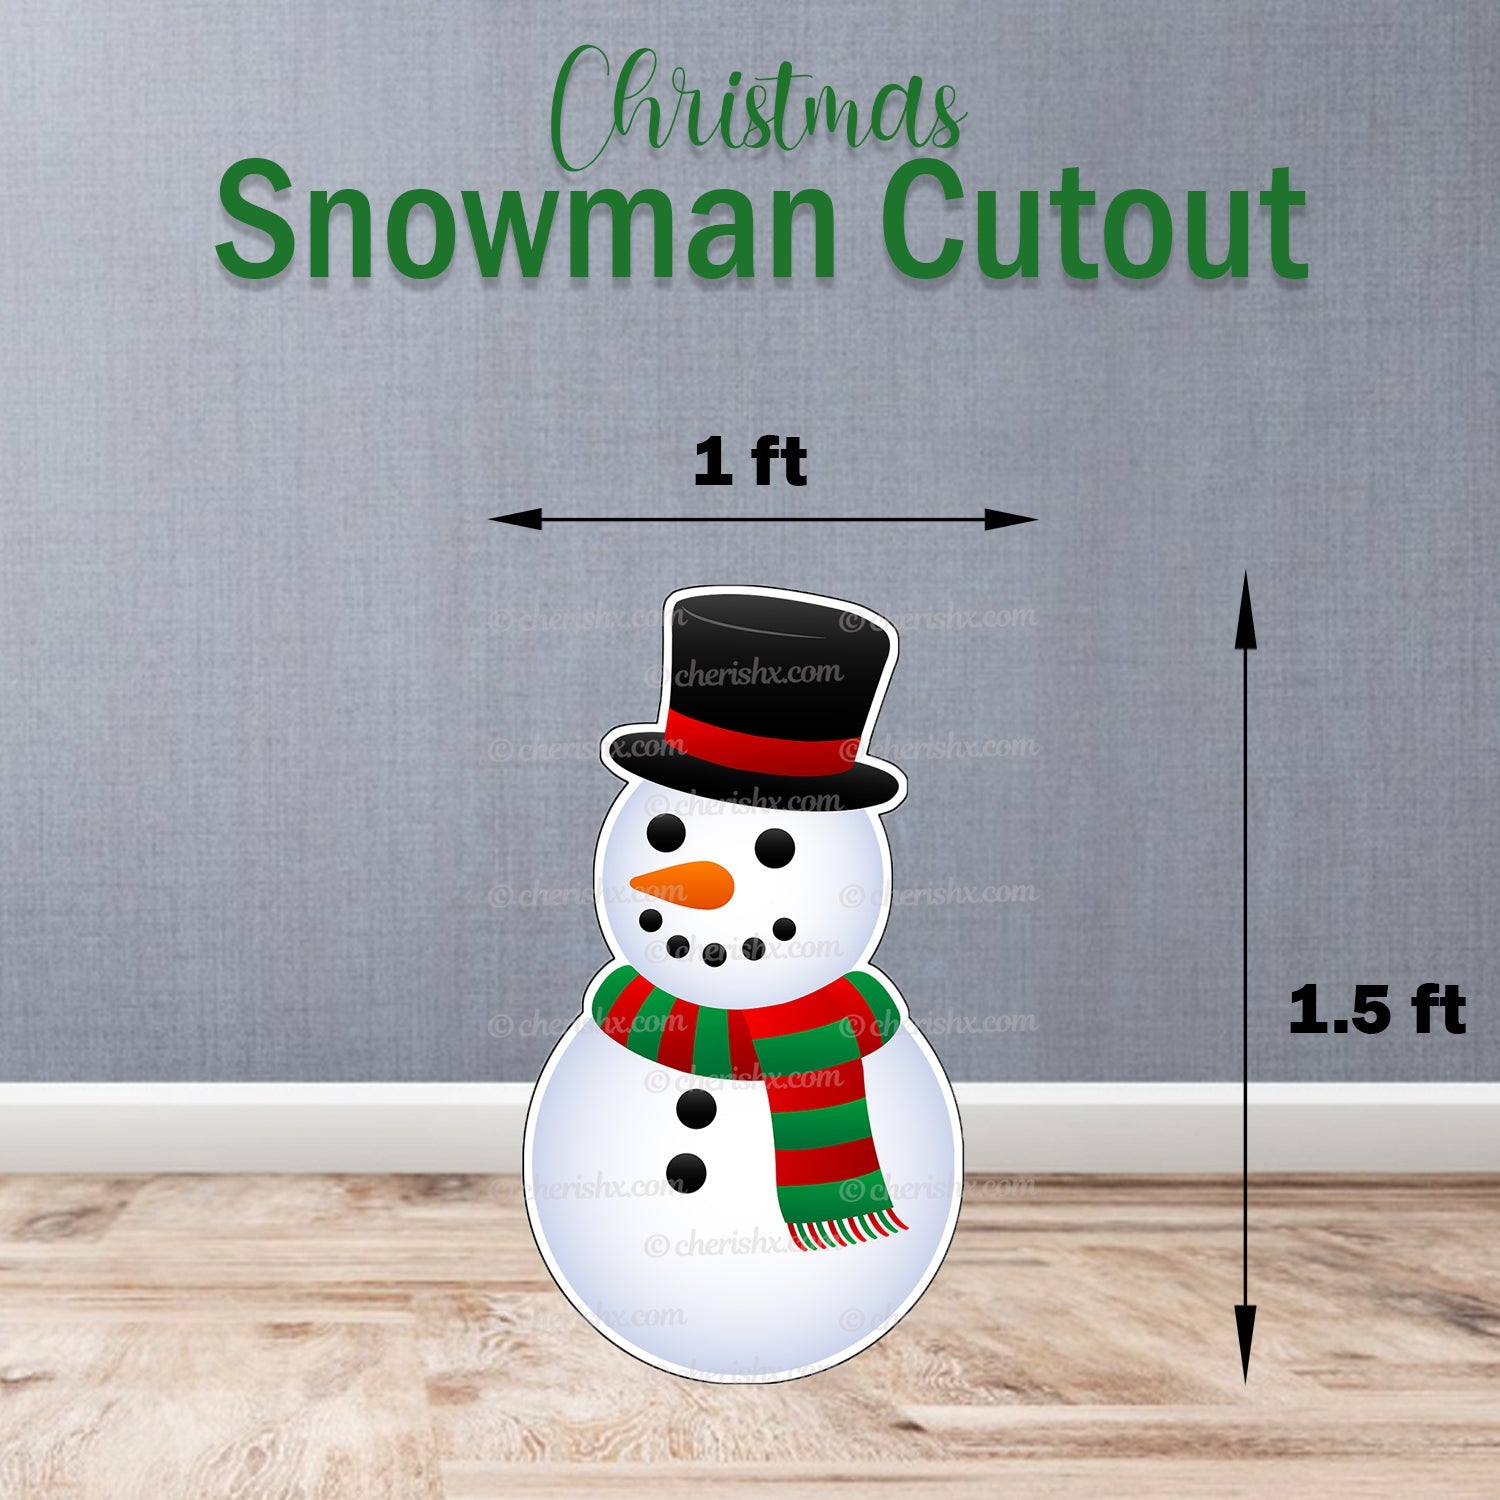 Christmas Theme Party Cutout - Snowman - CherishX Partystore